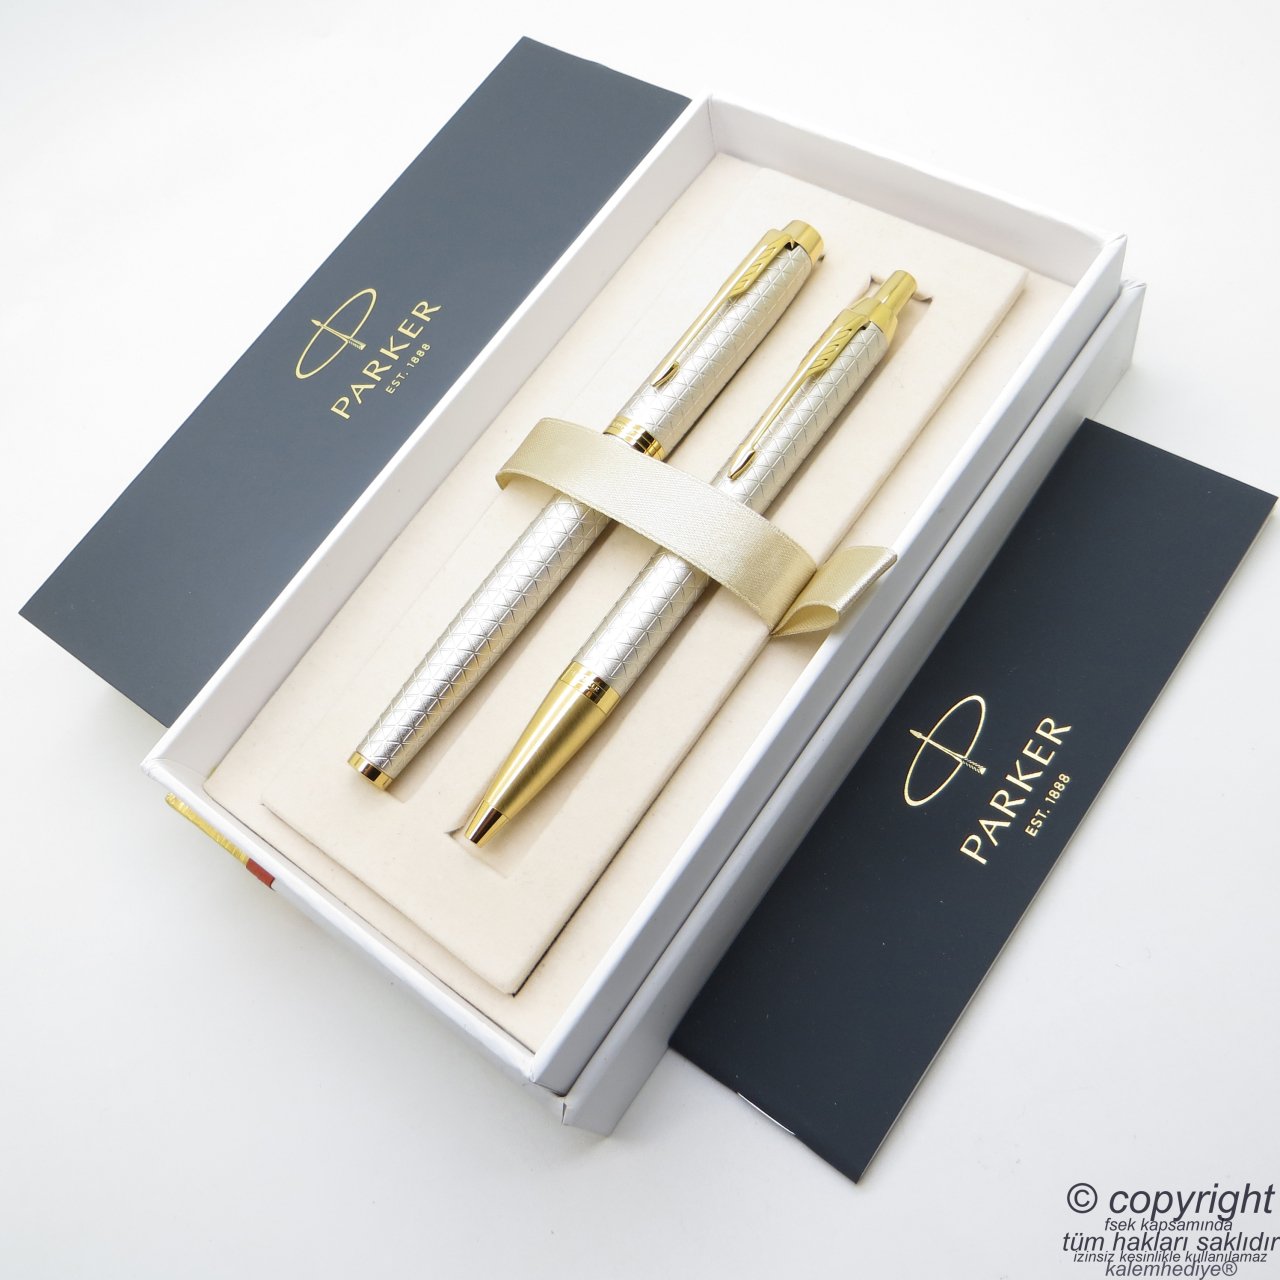 Parker IM Premium Desenli Saten Altın Dolma Kalem + Tükenmez Kalem | İsme Özel Kalem | Hediyelik Kalem